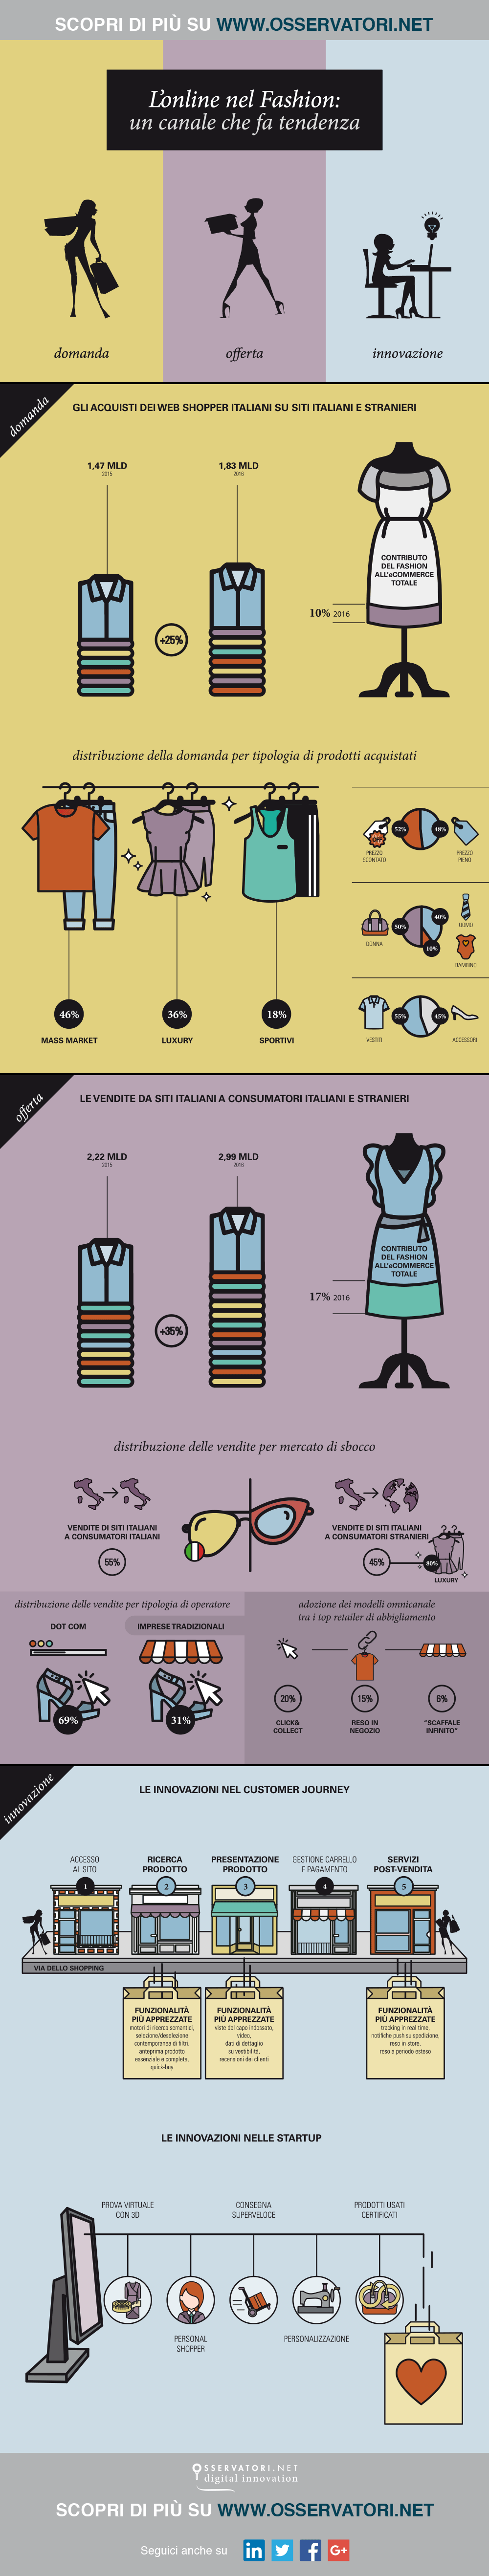 infografica fashion online